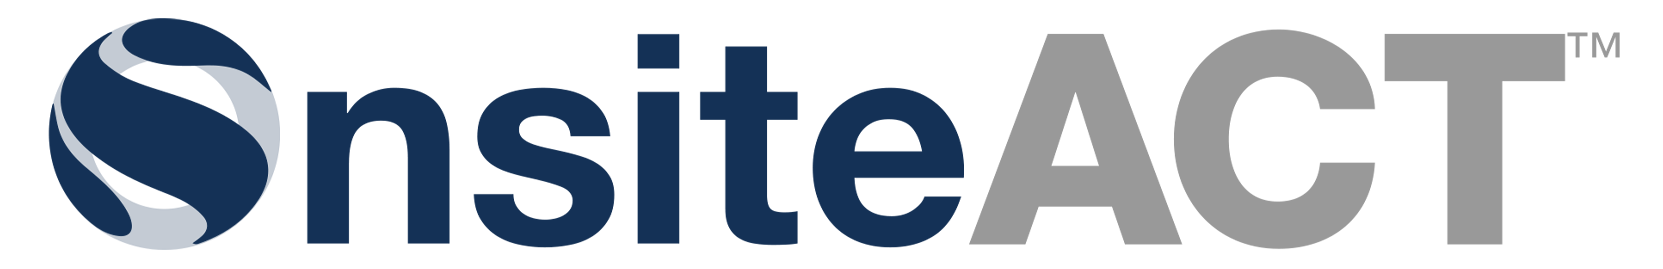 OnsiteACT Logo